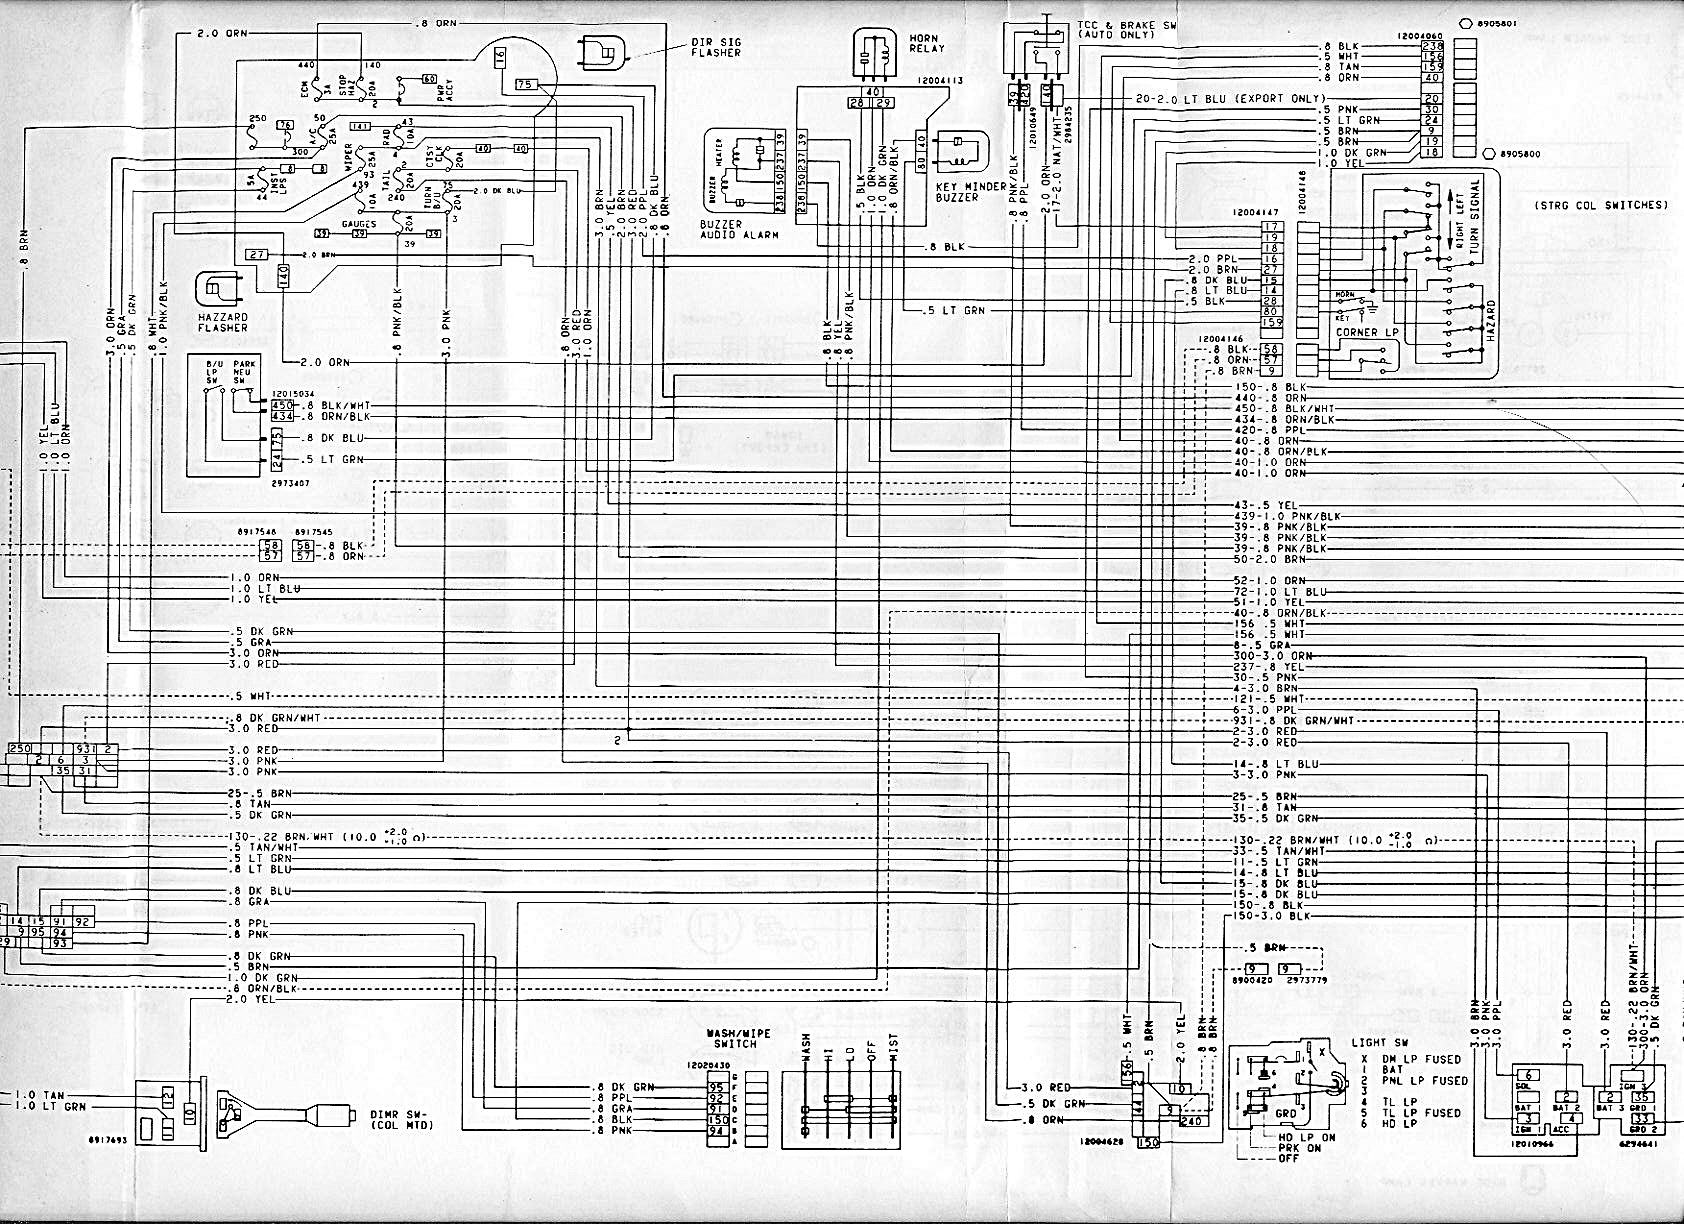 1983 G Imside column wiring.jpg